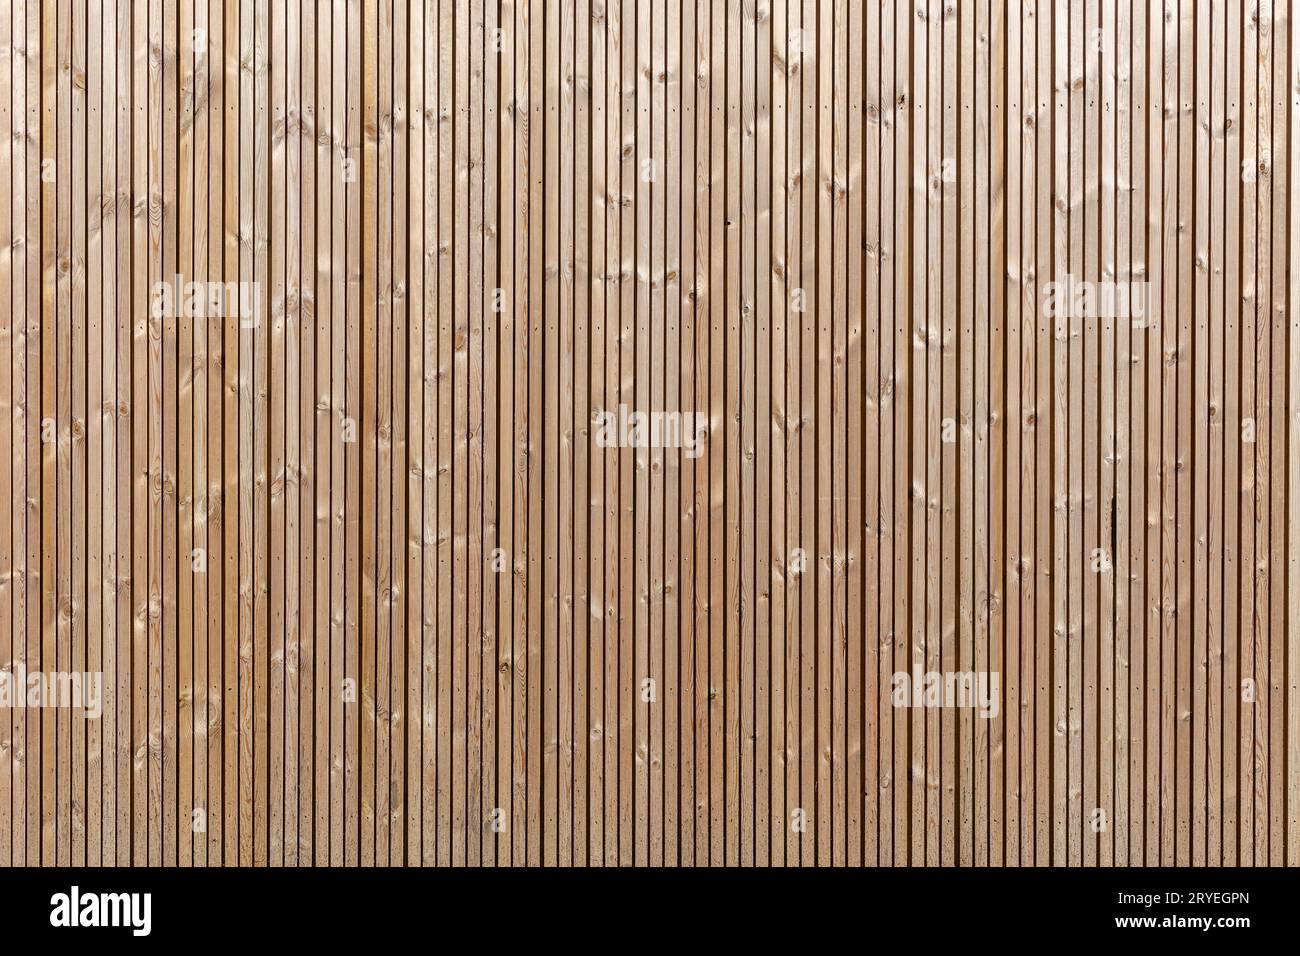 Wood paneling background texture Stock Photo